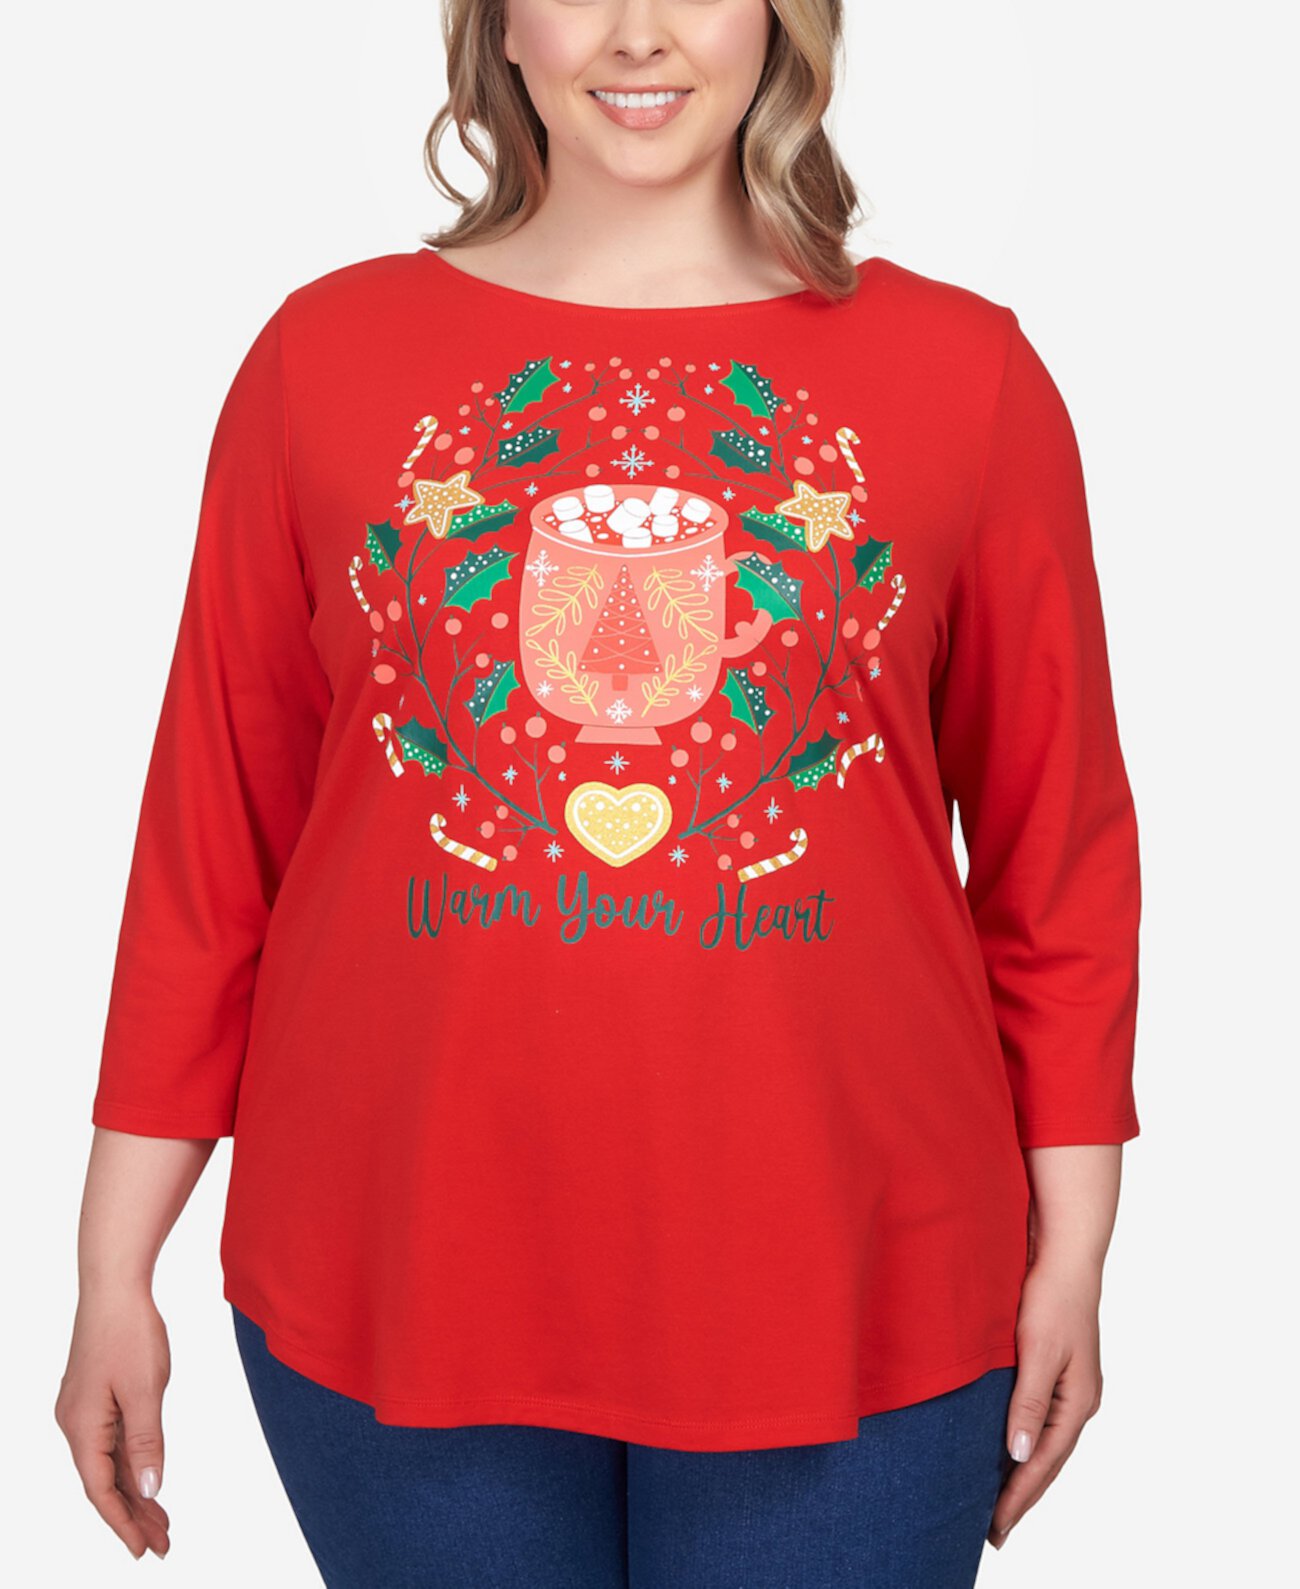 Плюс размер Согрей твое сердце Праздничная футболка с рукавами три четверти Ruby Rd.